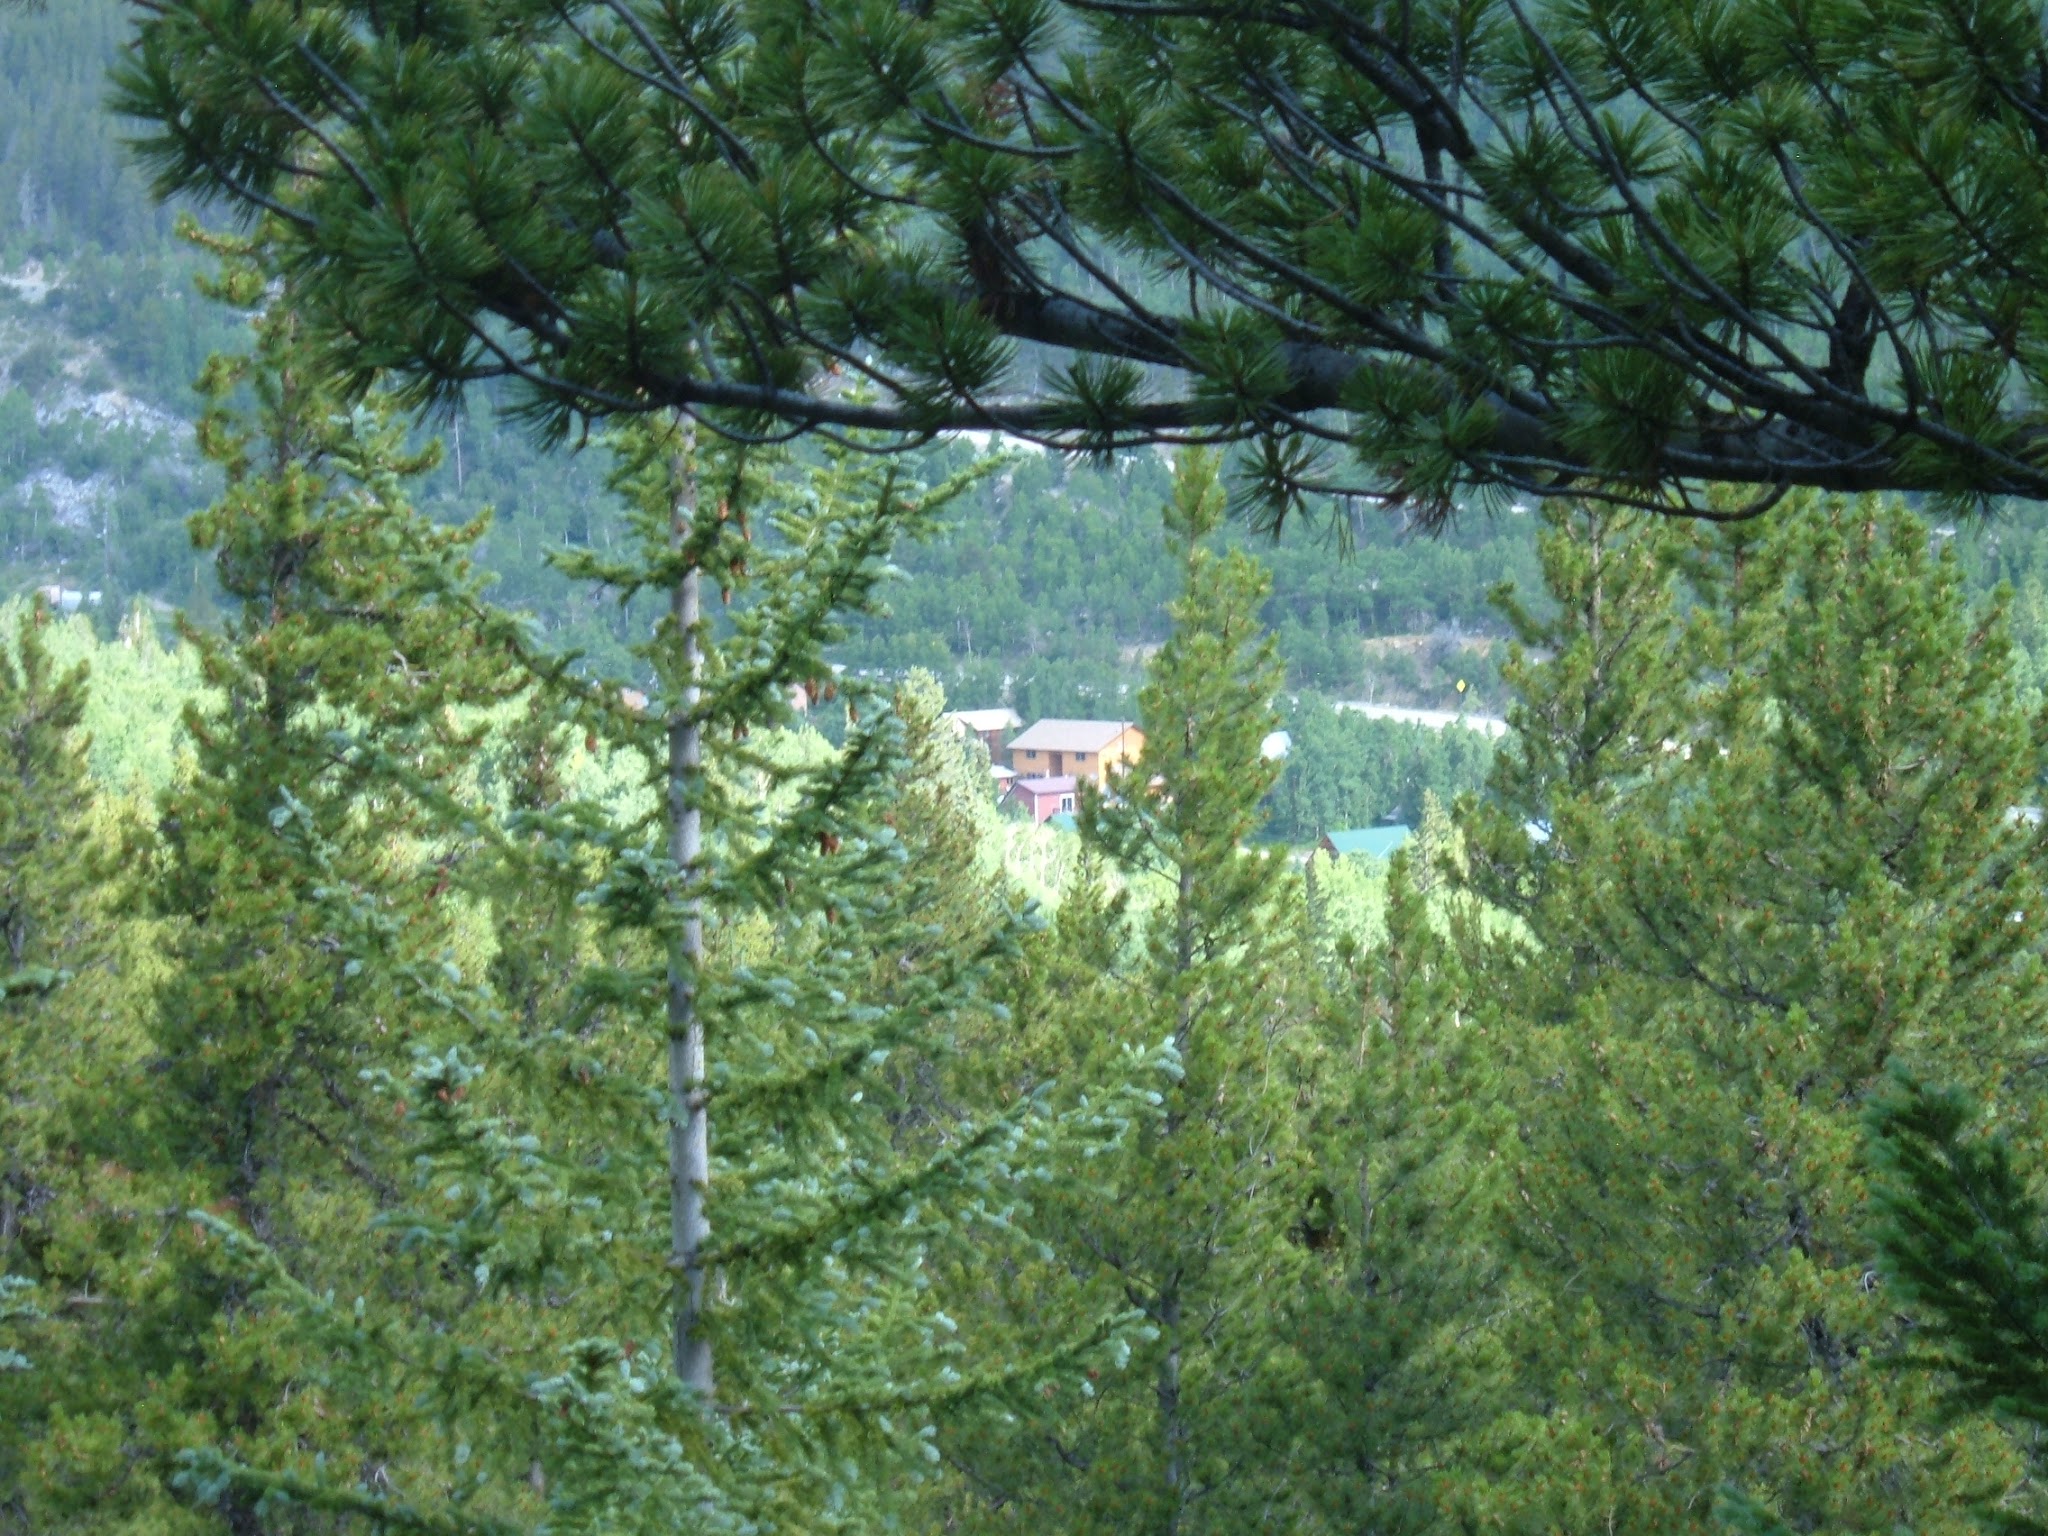 Mountain view in the trees of Ski Town Condos.